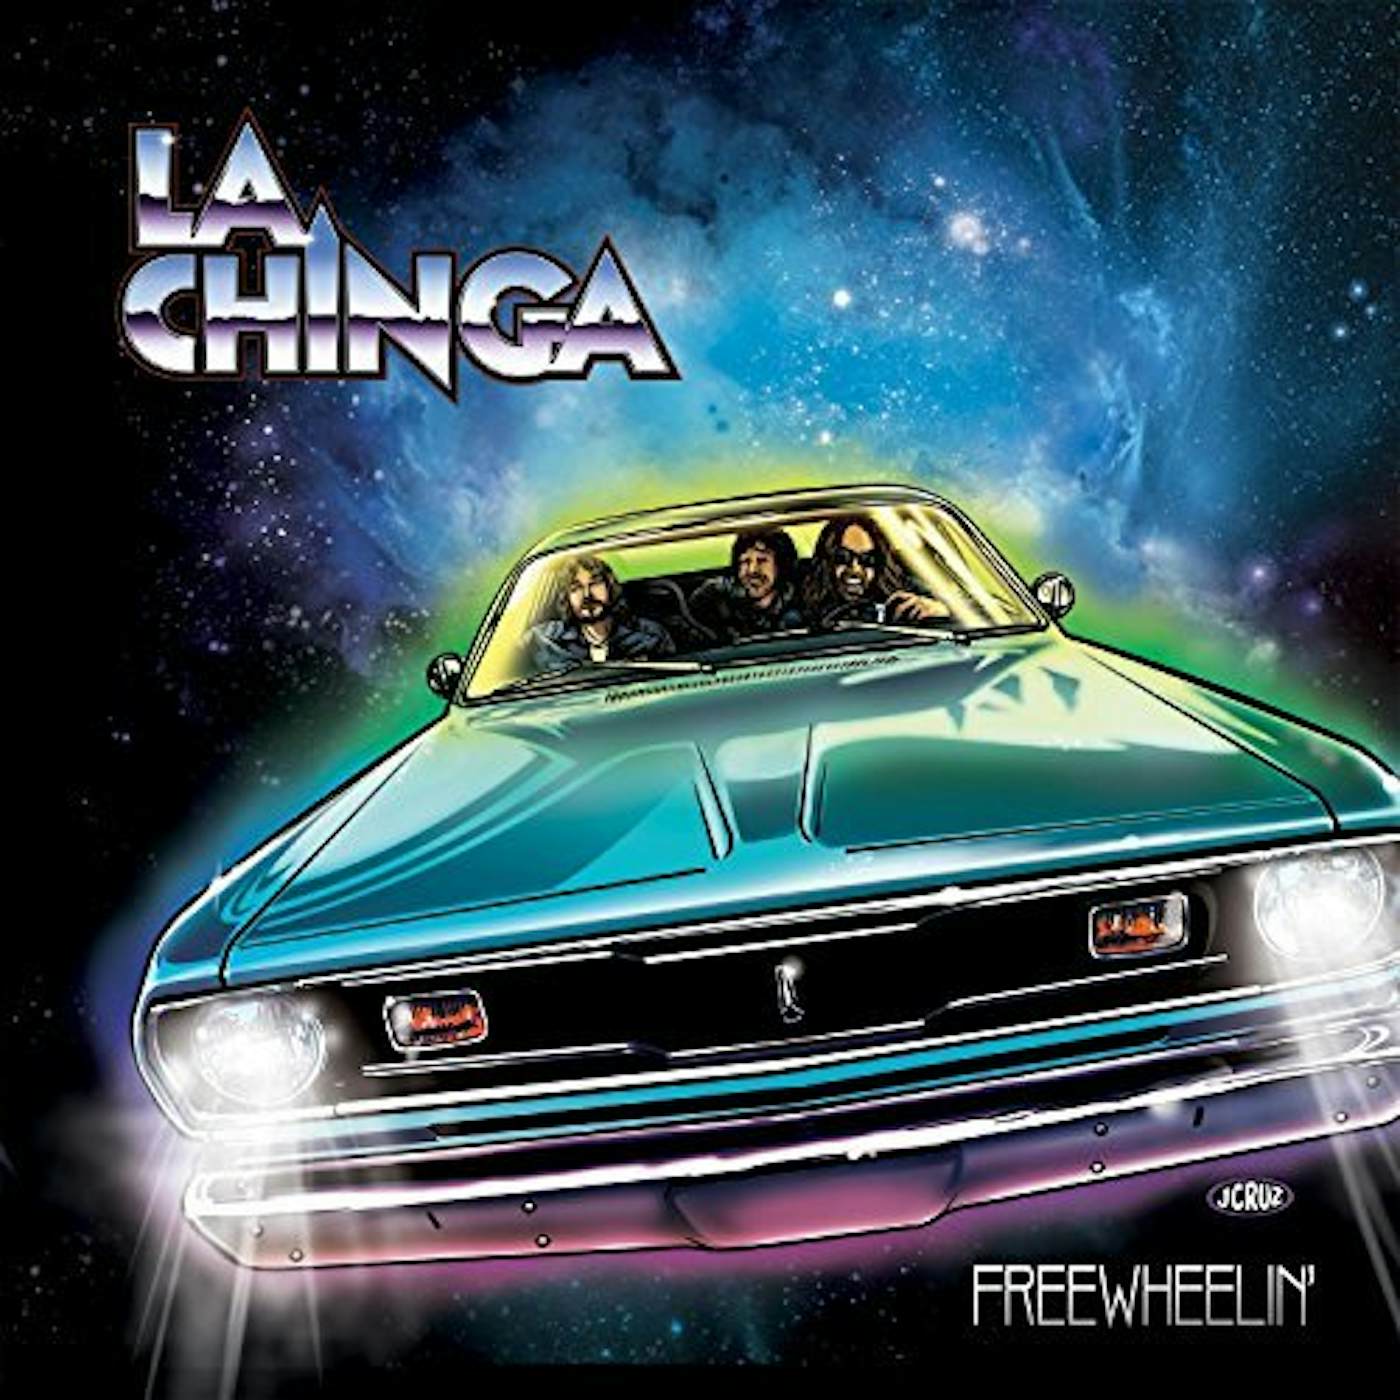 La Chinga FREEWHEELIN' CD